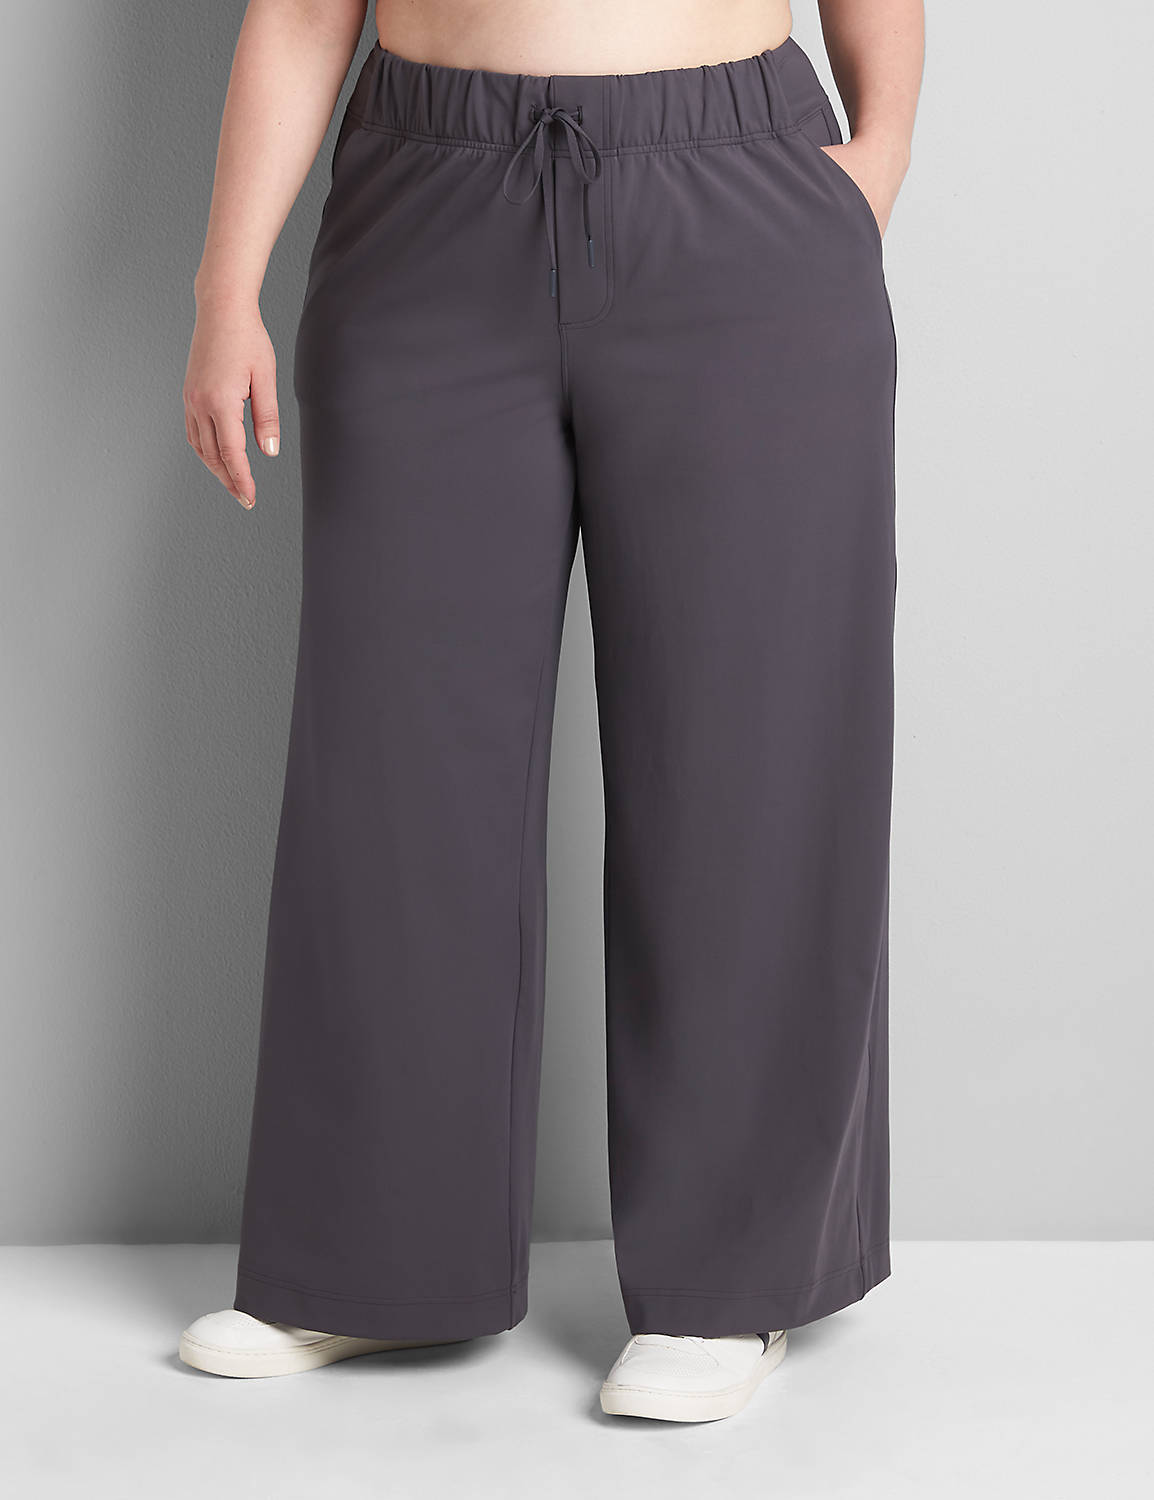 LIVI Wide-Leg Trouser Pant Product Image 1